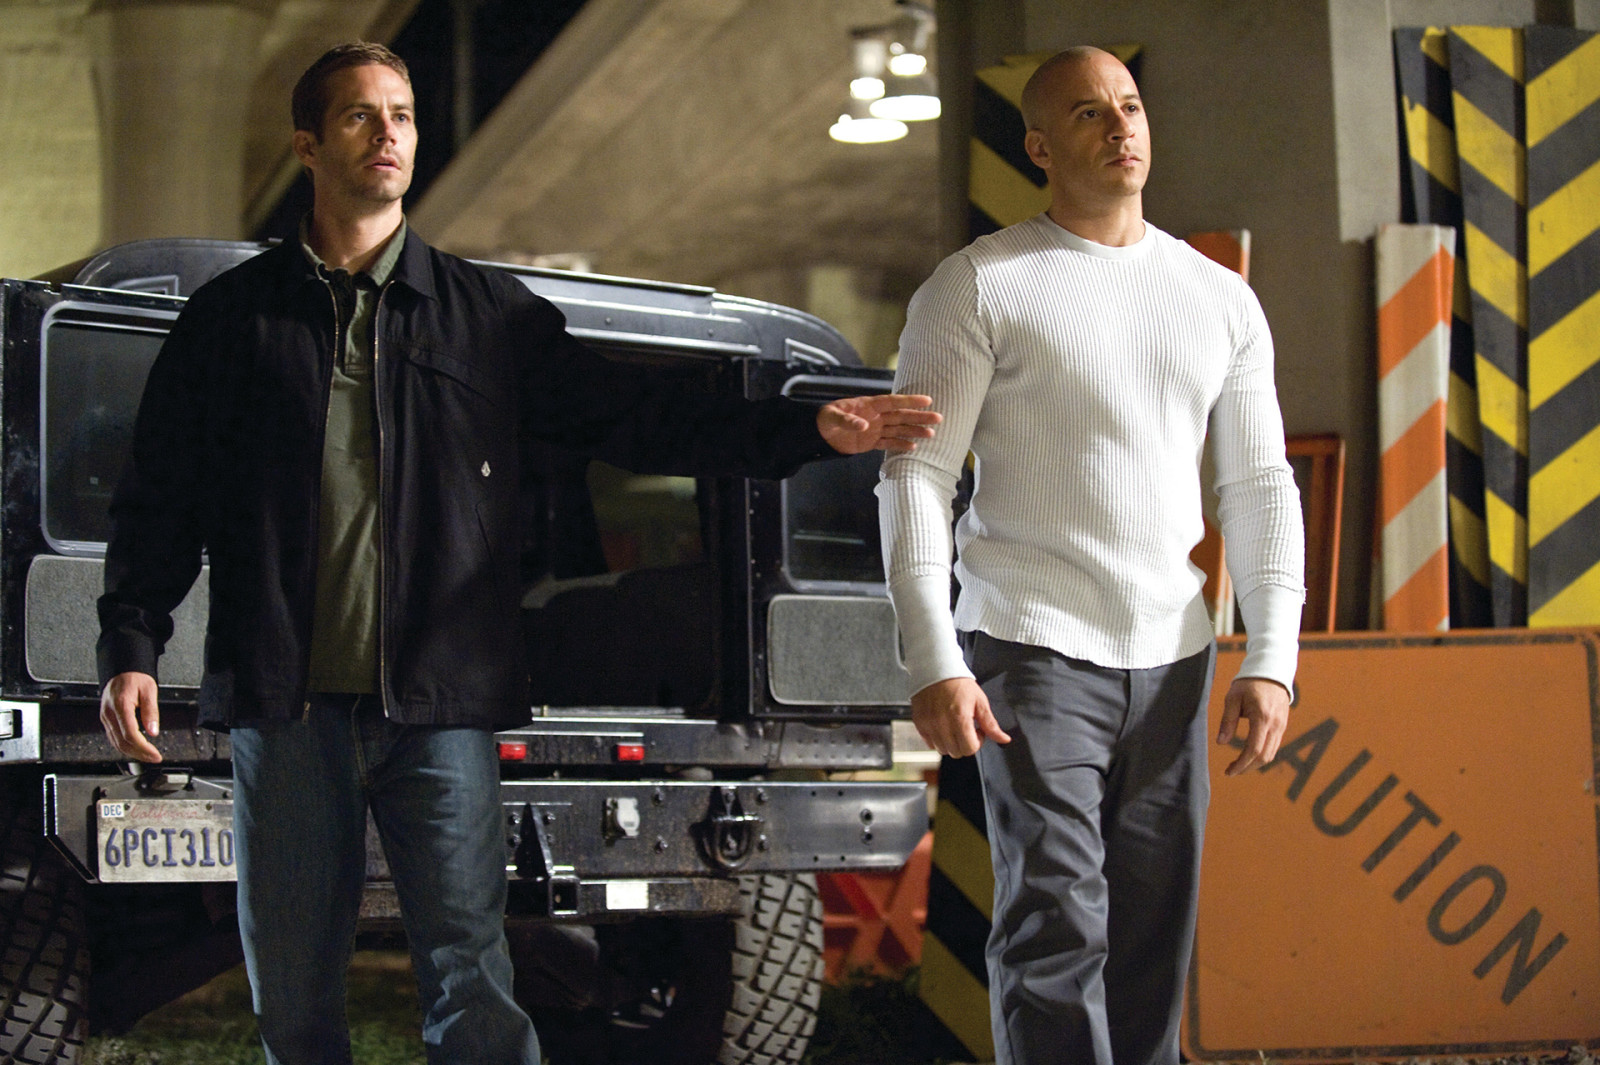 VIN Diesel, Dominic Toretto, Paul Walker, Brian O'Conner